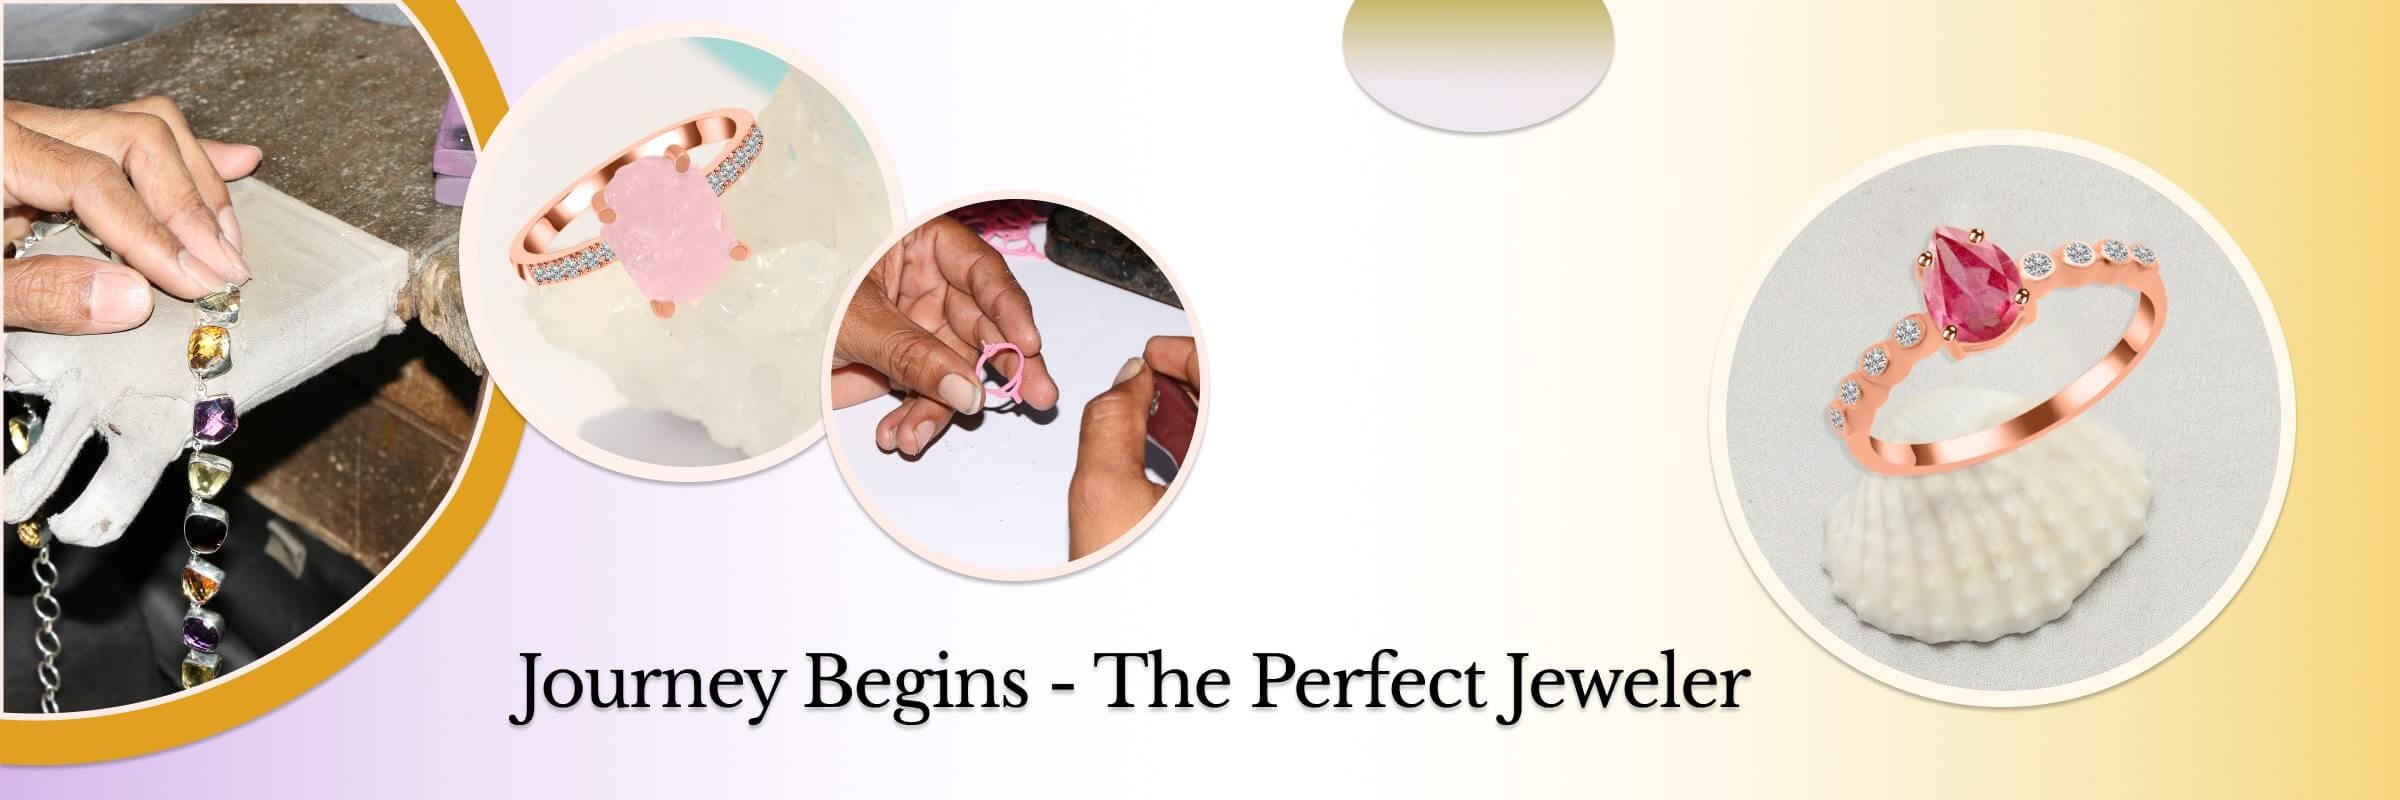 Choosing the Right Jeweler